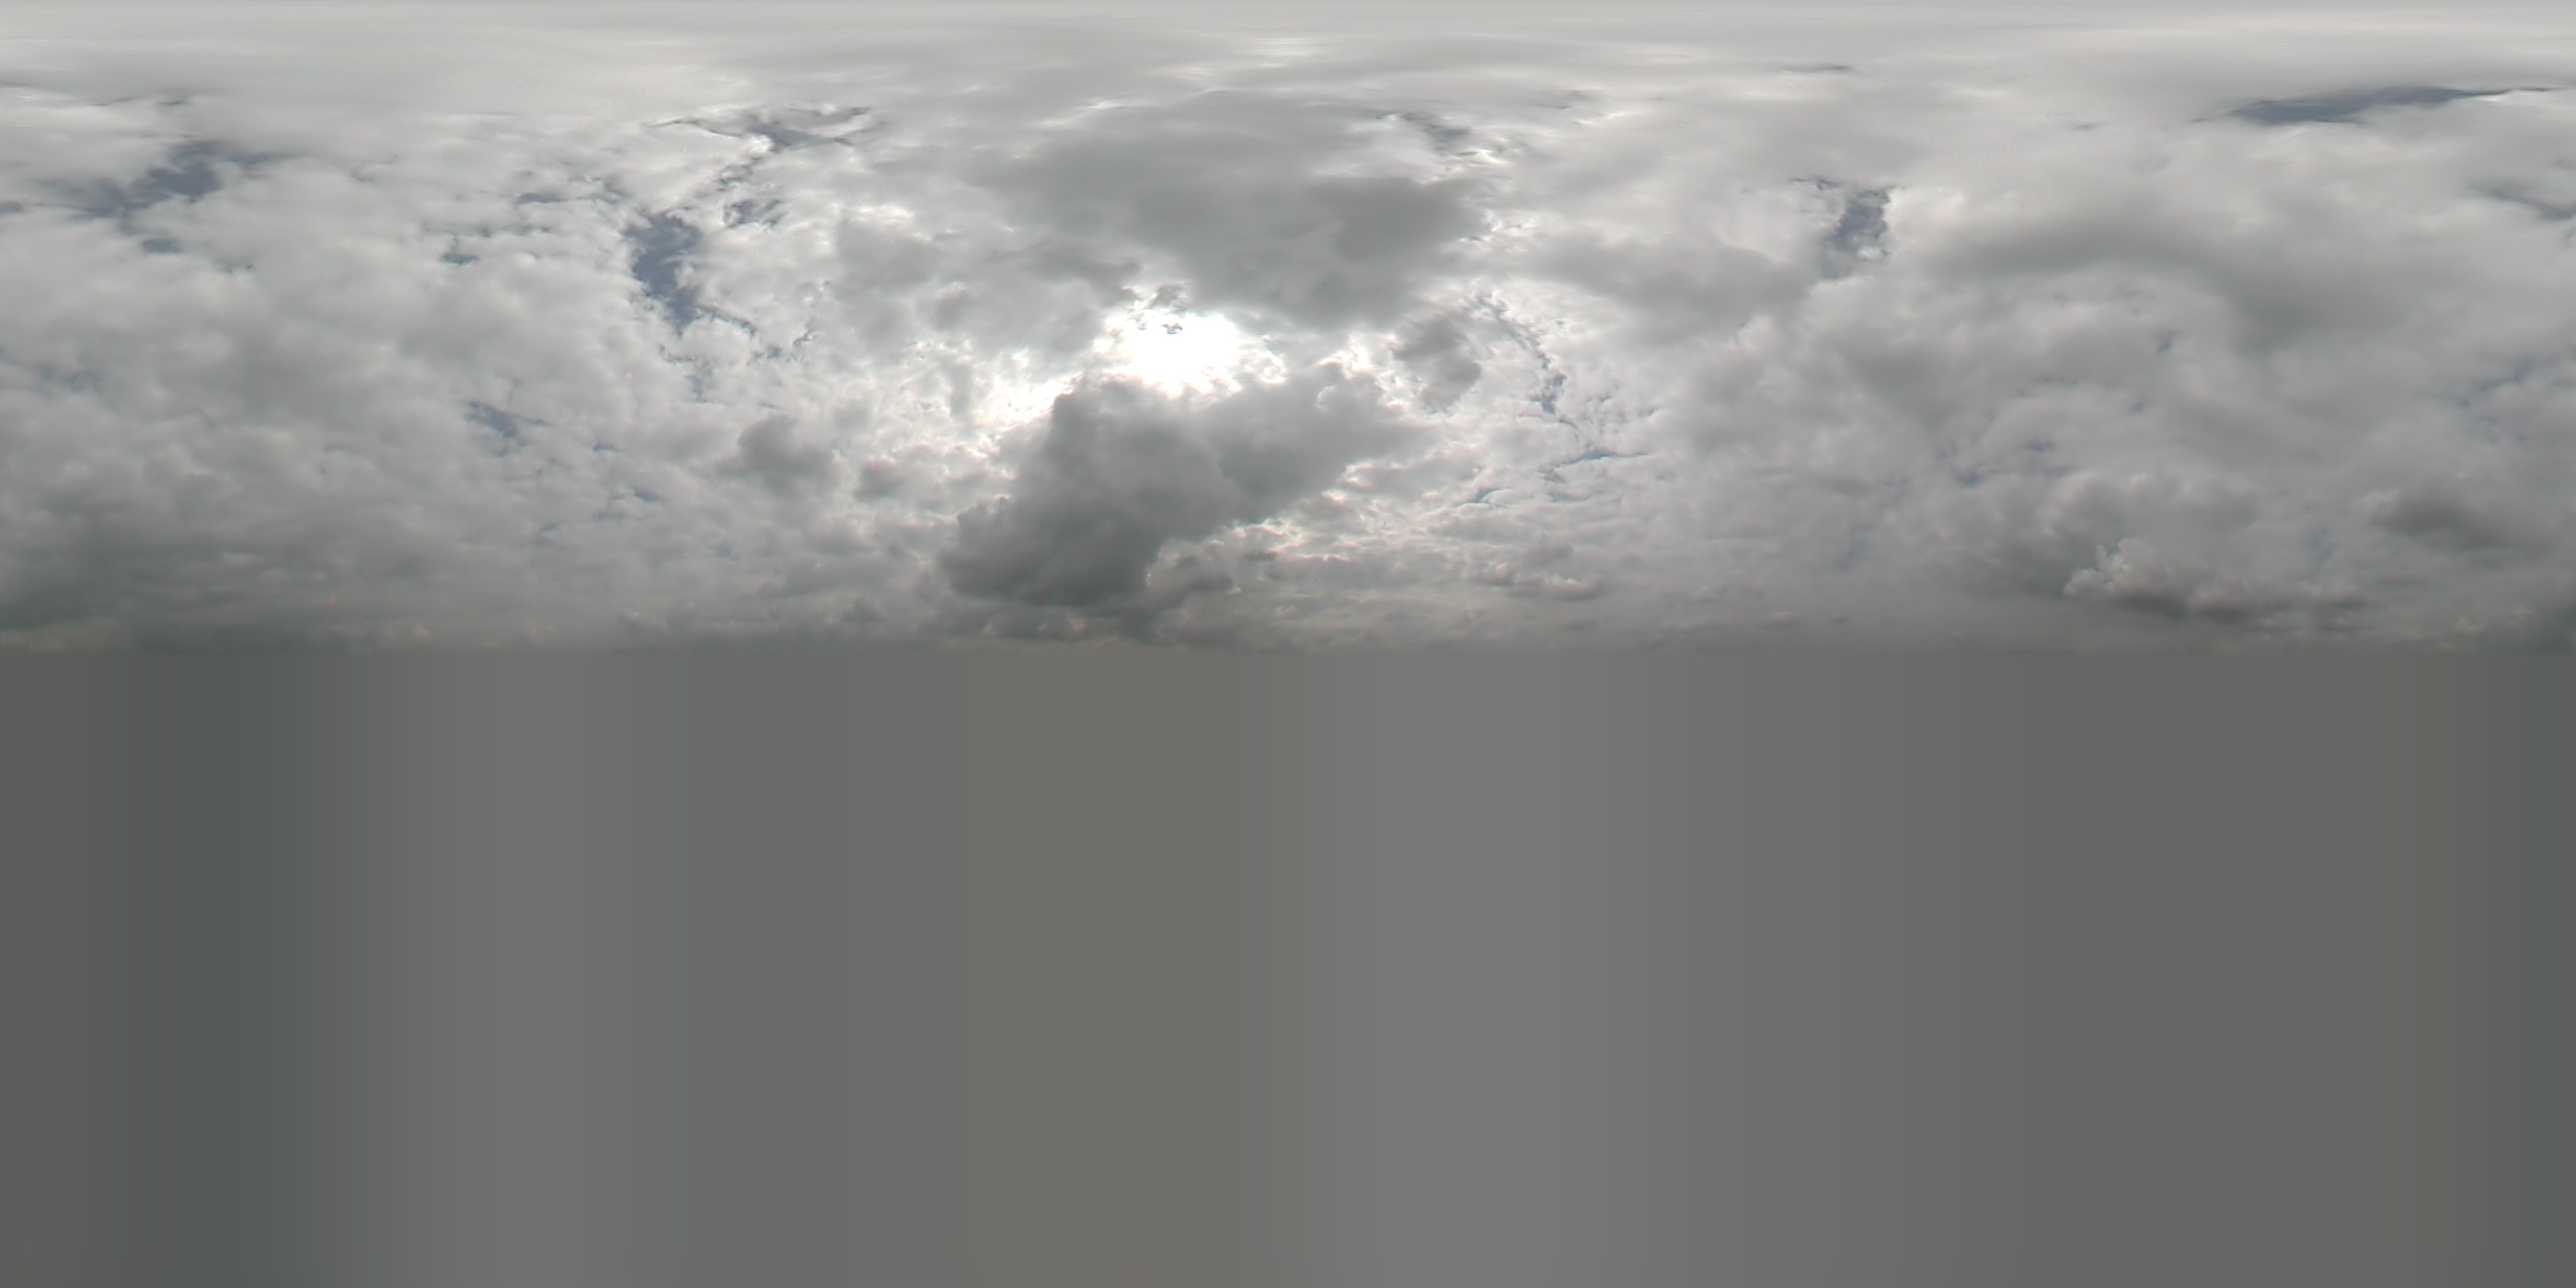 Valkirian skyes 1.20 1. HDRI карты 3d Max. Скайбокс сталкер. Облака вид сверху.